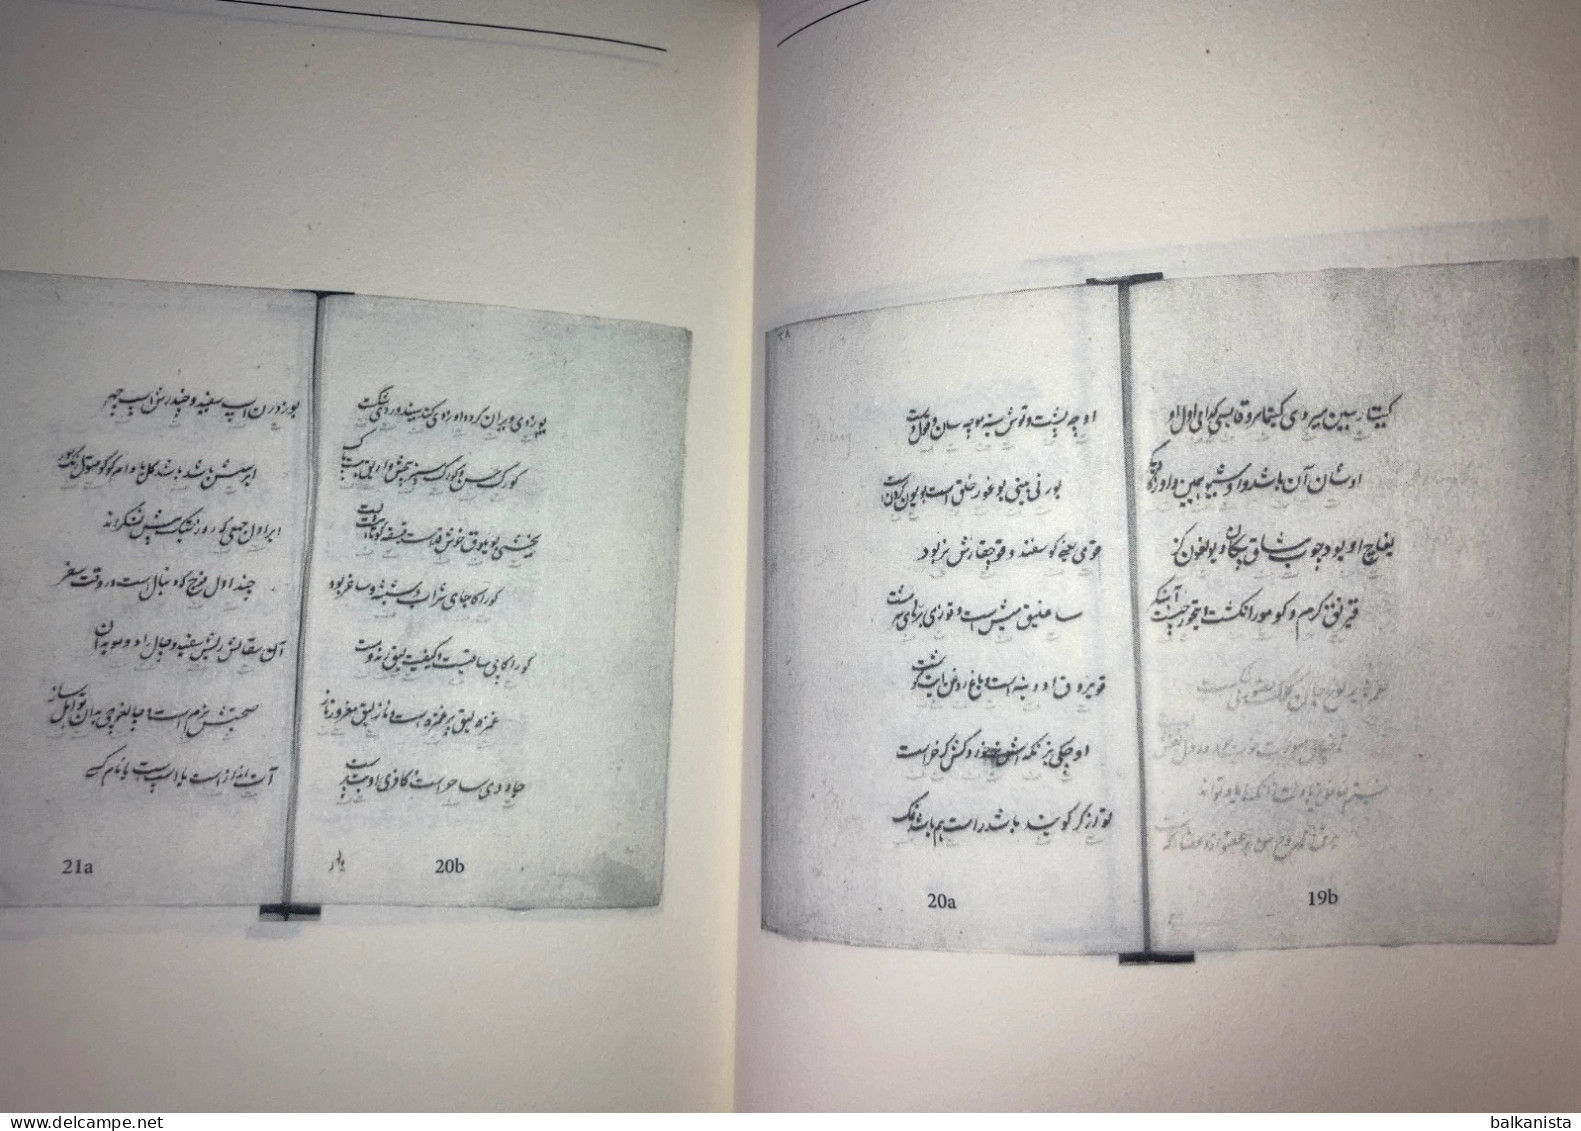 Nisab-i Turki - Nisab-i Türki-i Turan  - Chagatai Persian Dictionary - Diccionarios